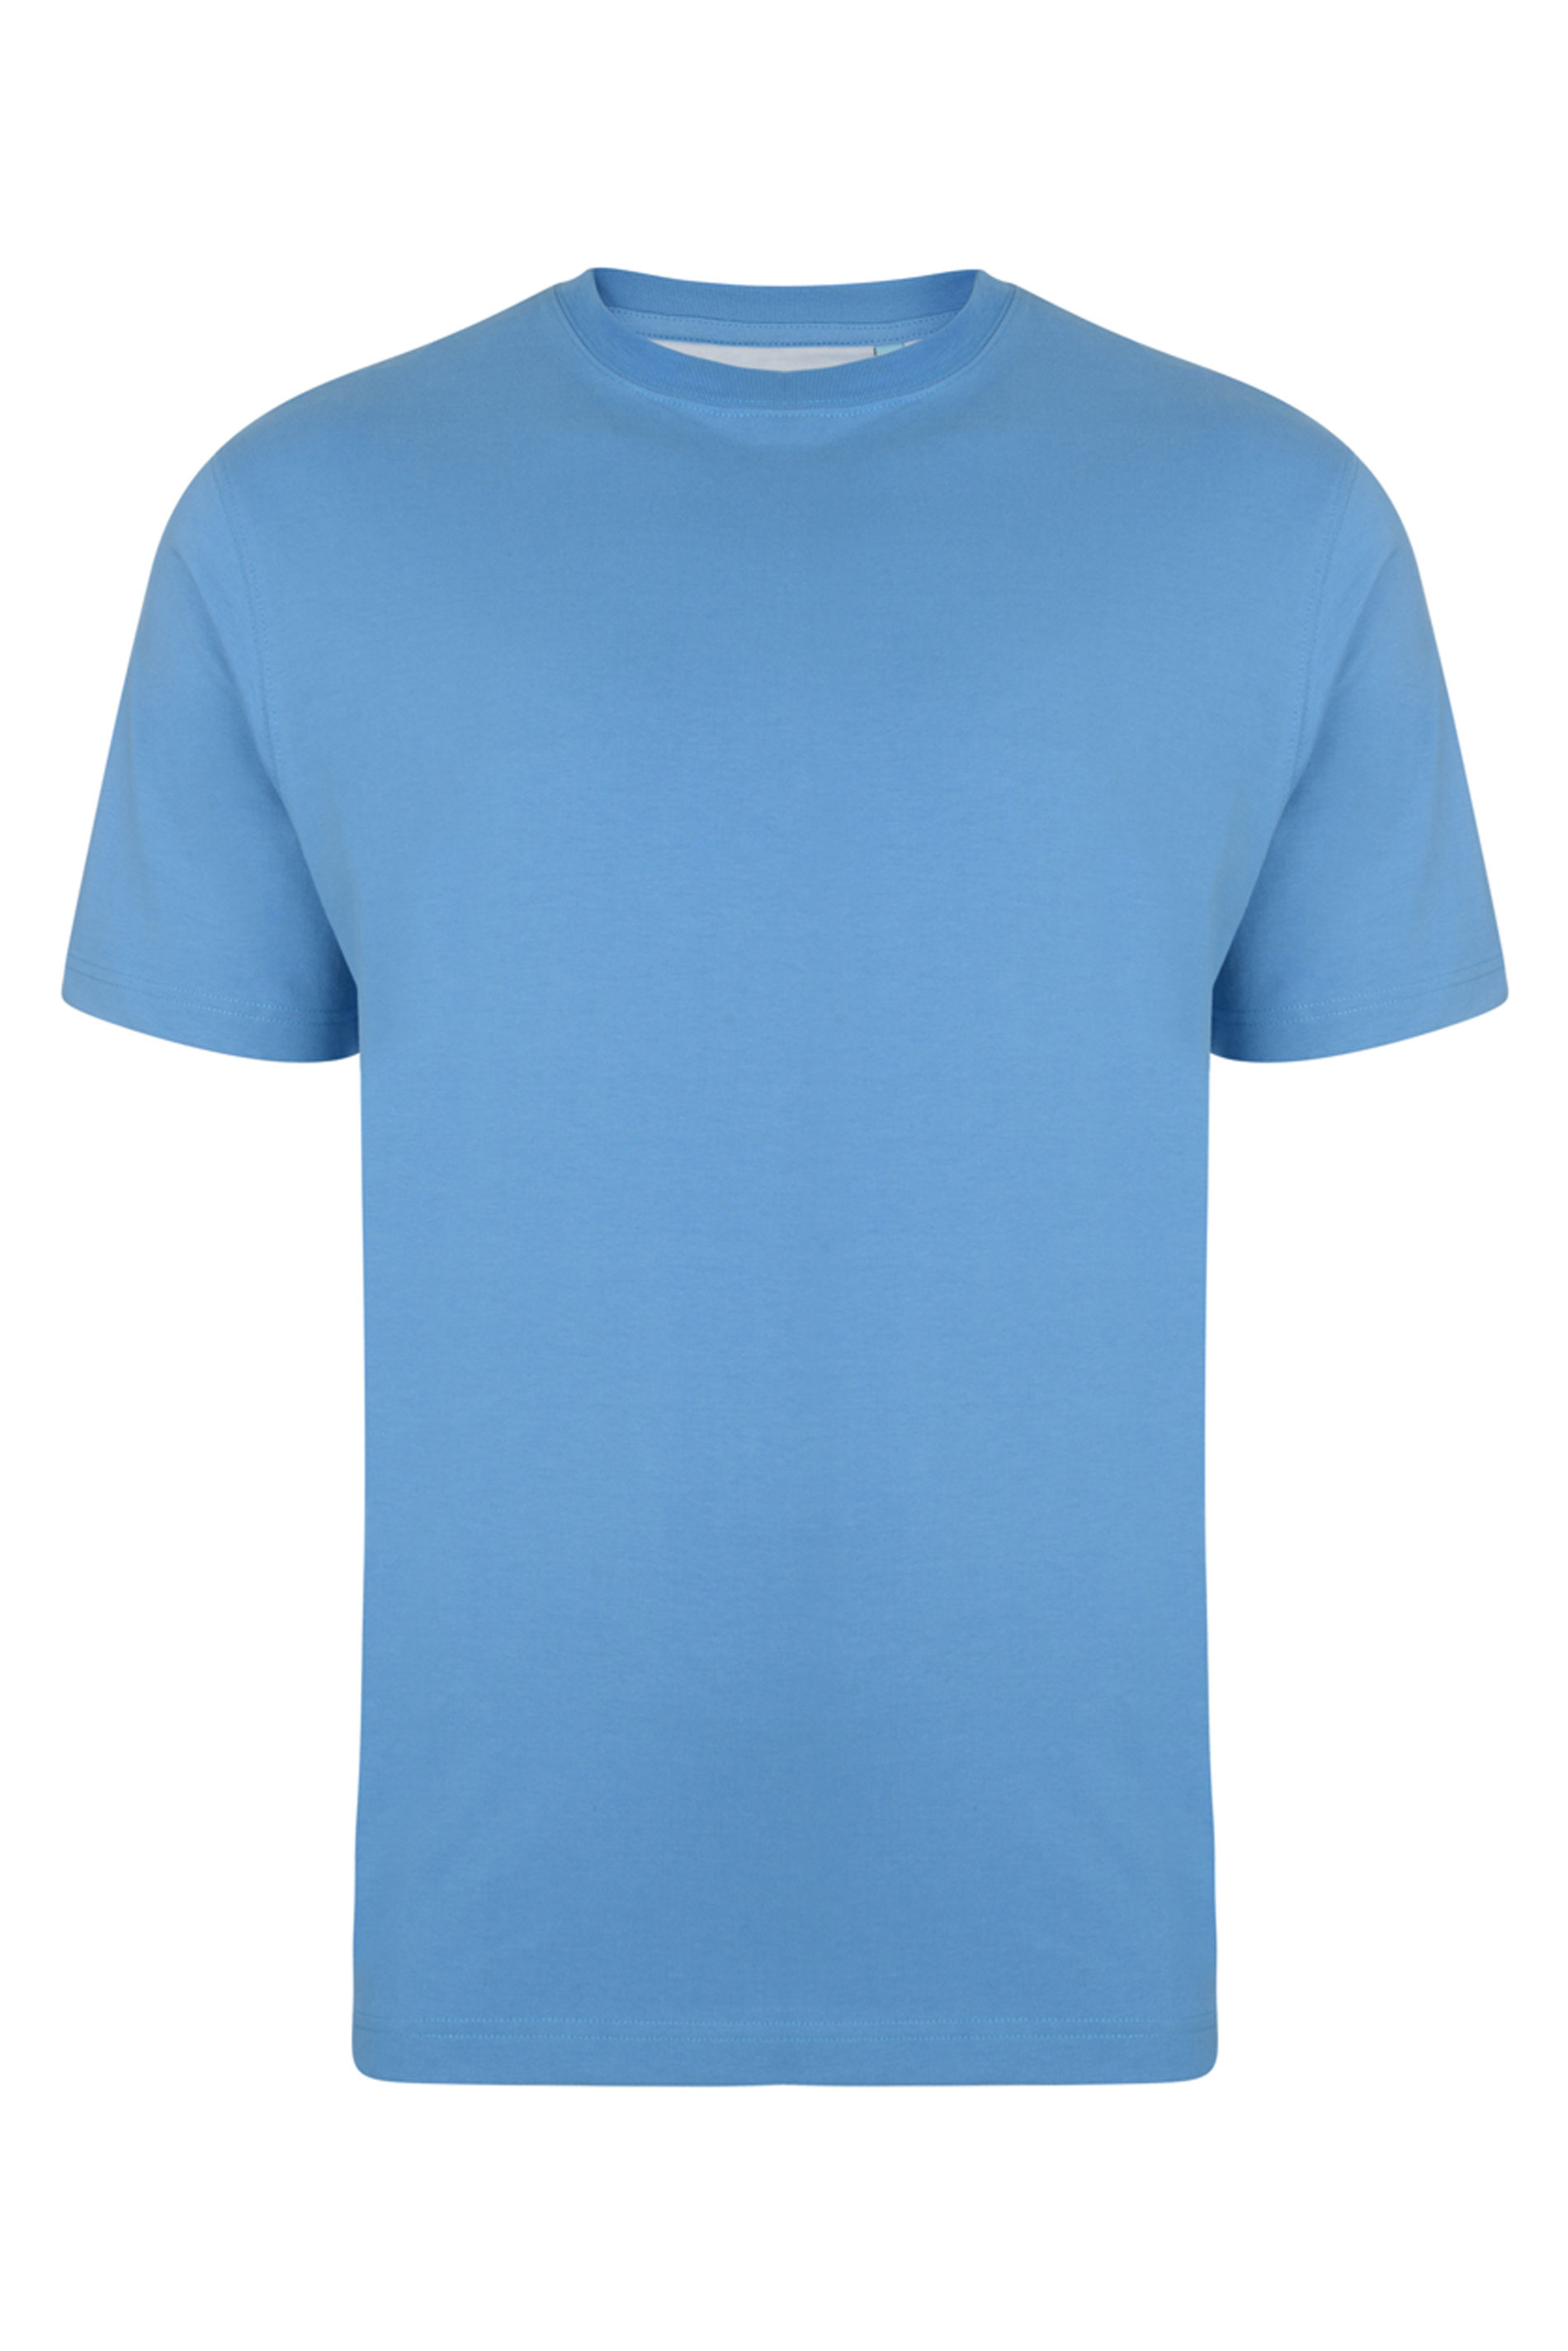 Kam Light Blue T-Shirt | BadRhino